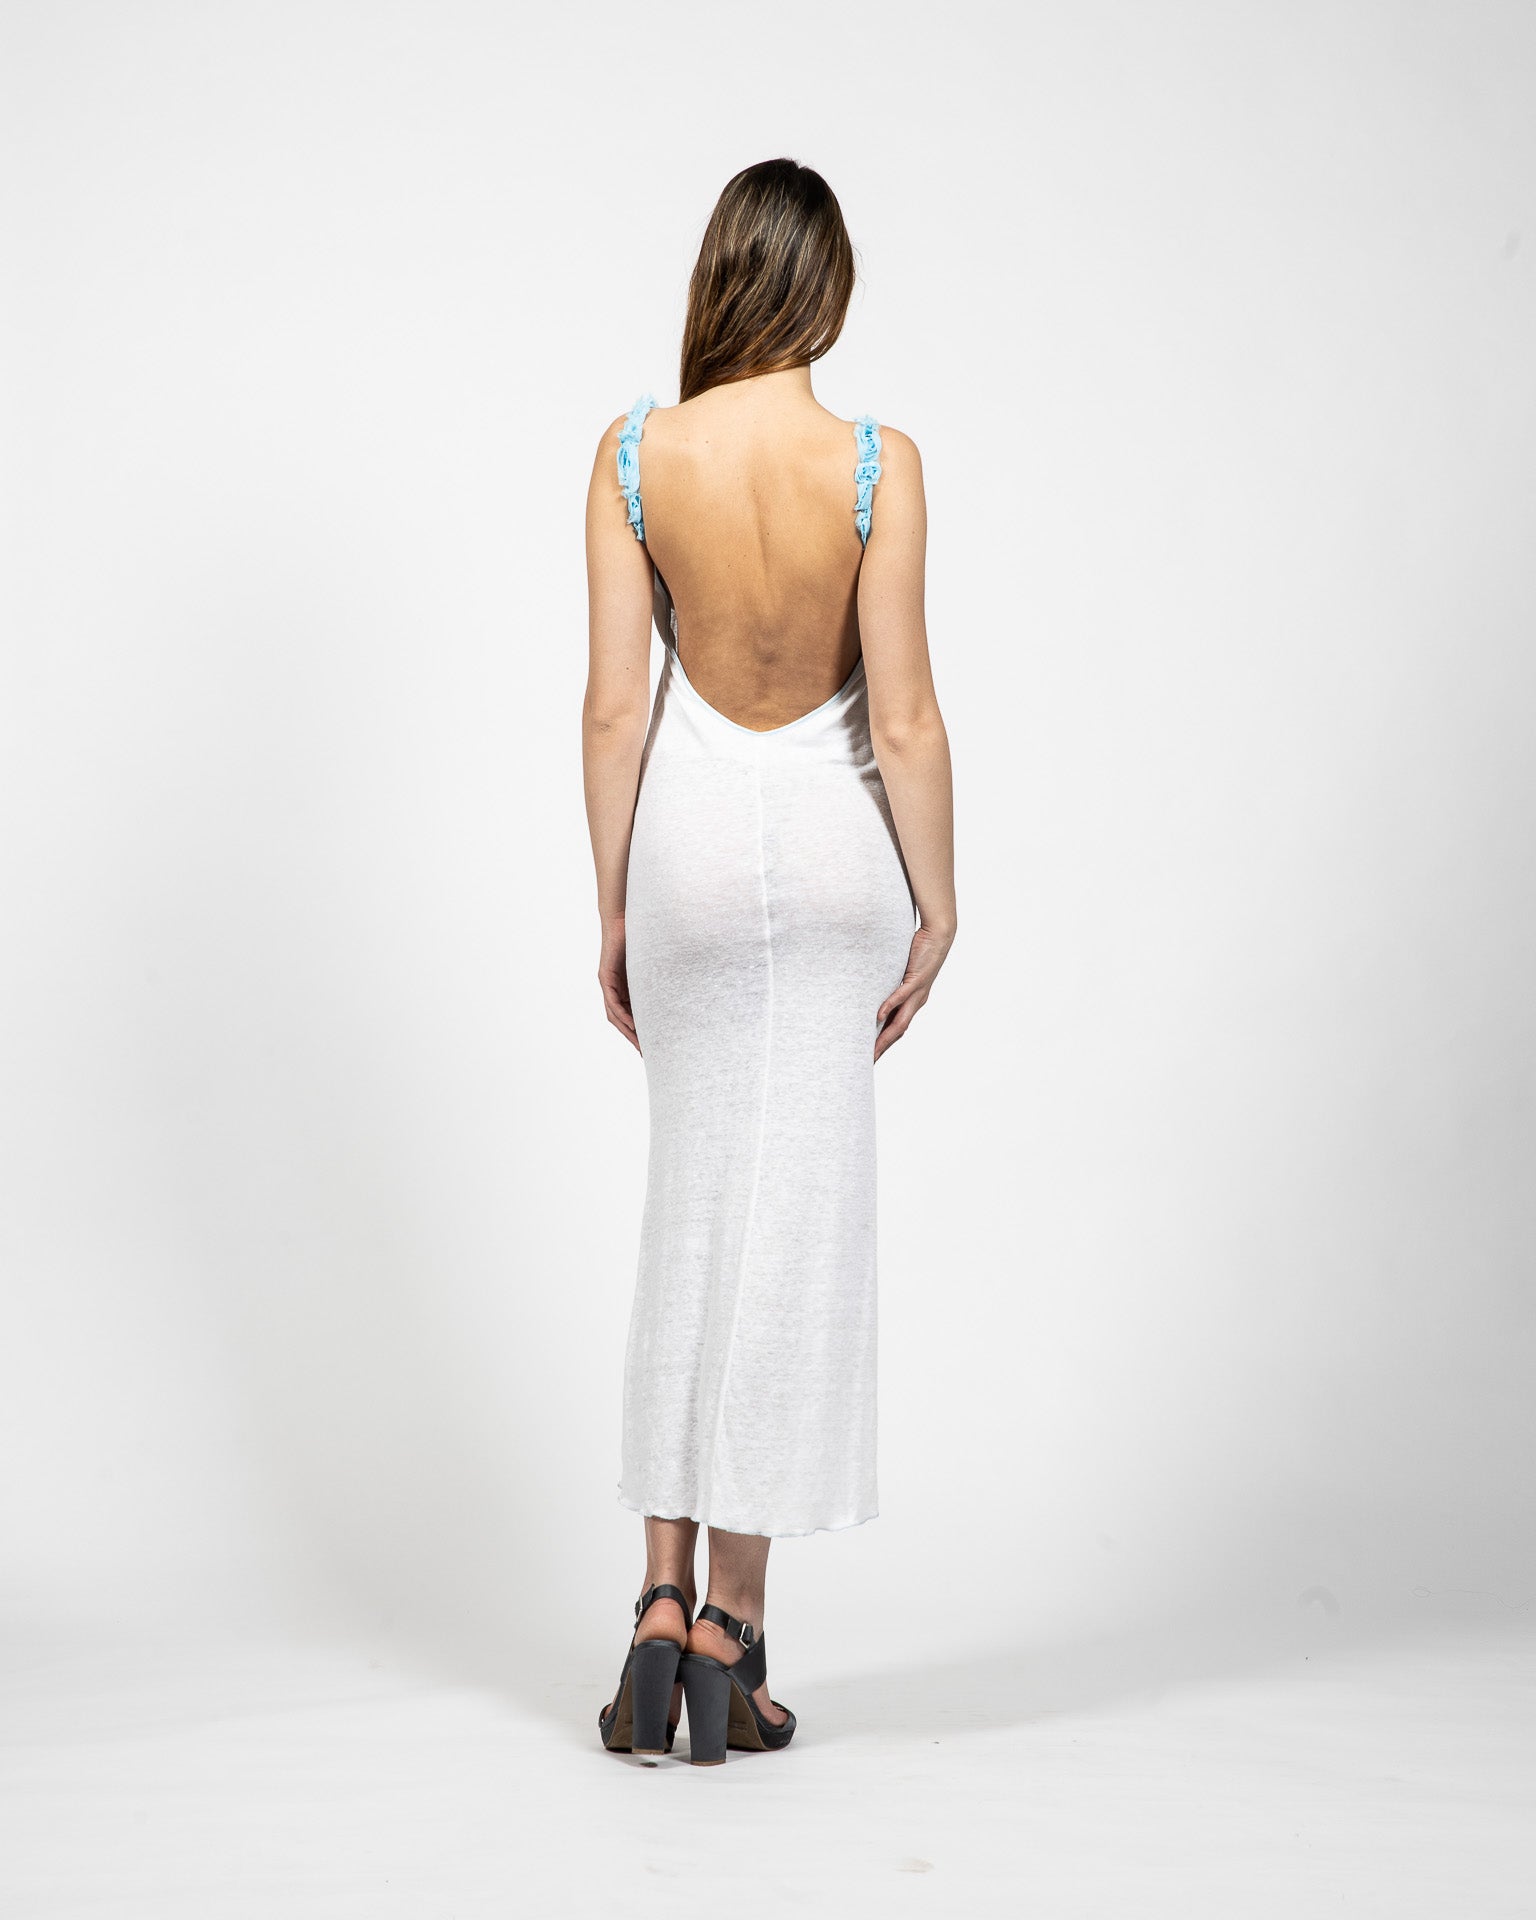 Long White Linen Dress - Back View - Samuel Vartan